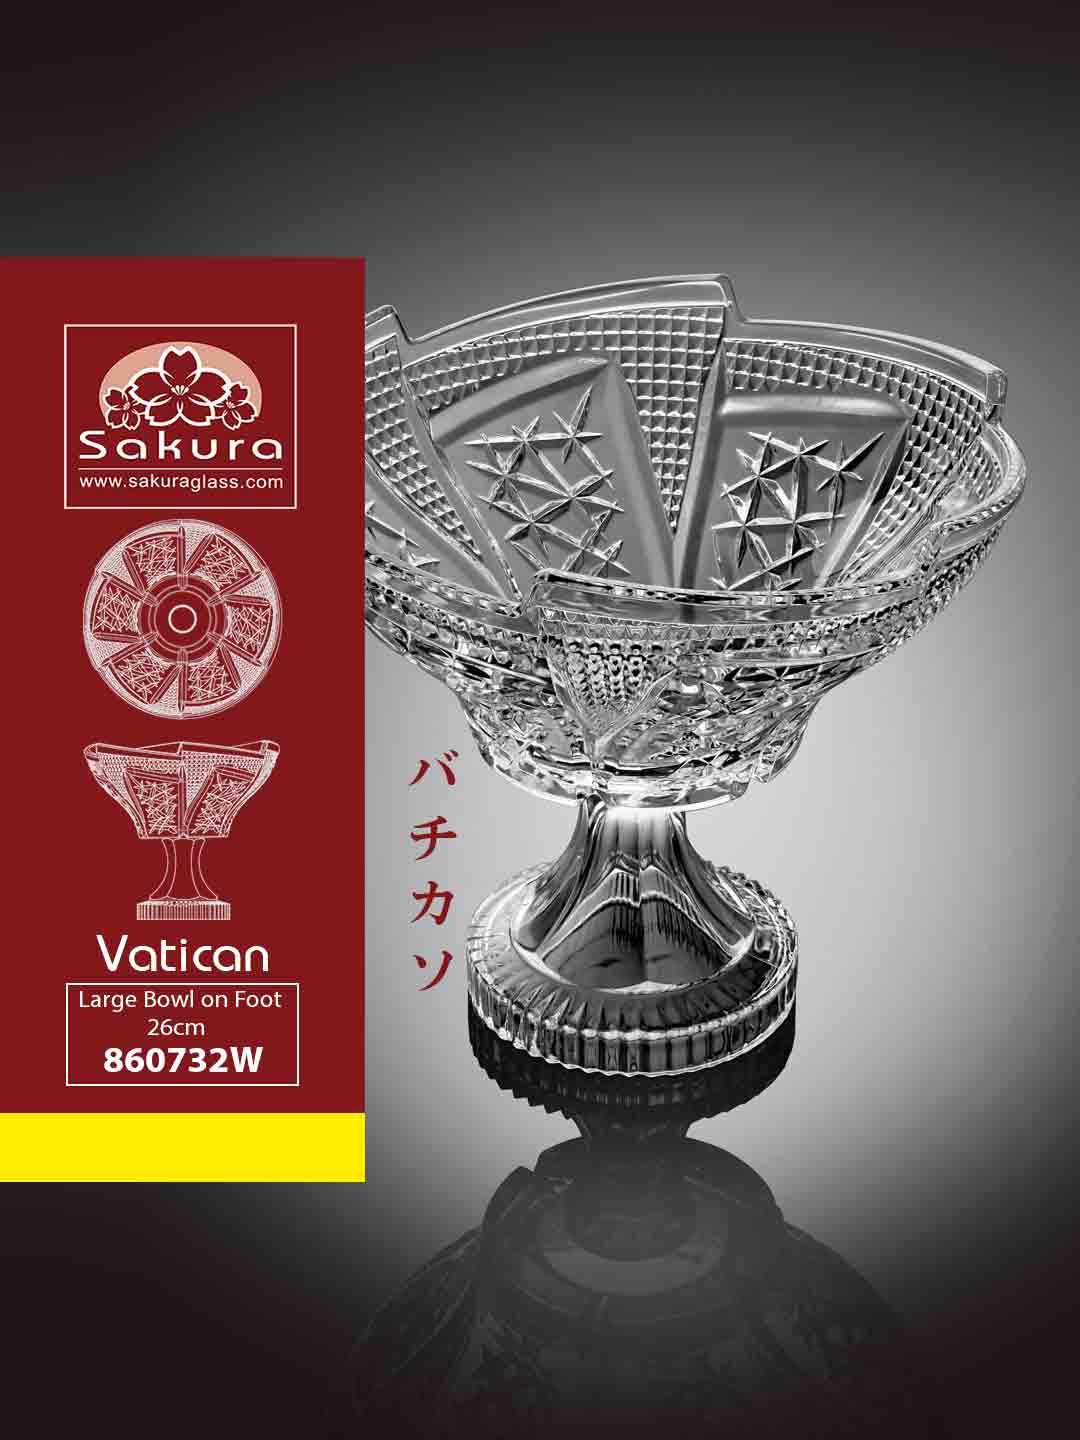 Sakura Product Vatican Large Bowl on Foot 26cm 860732W